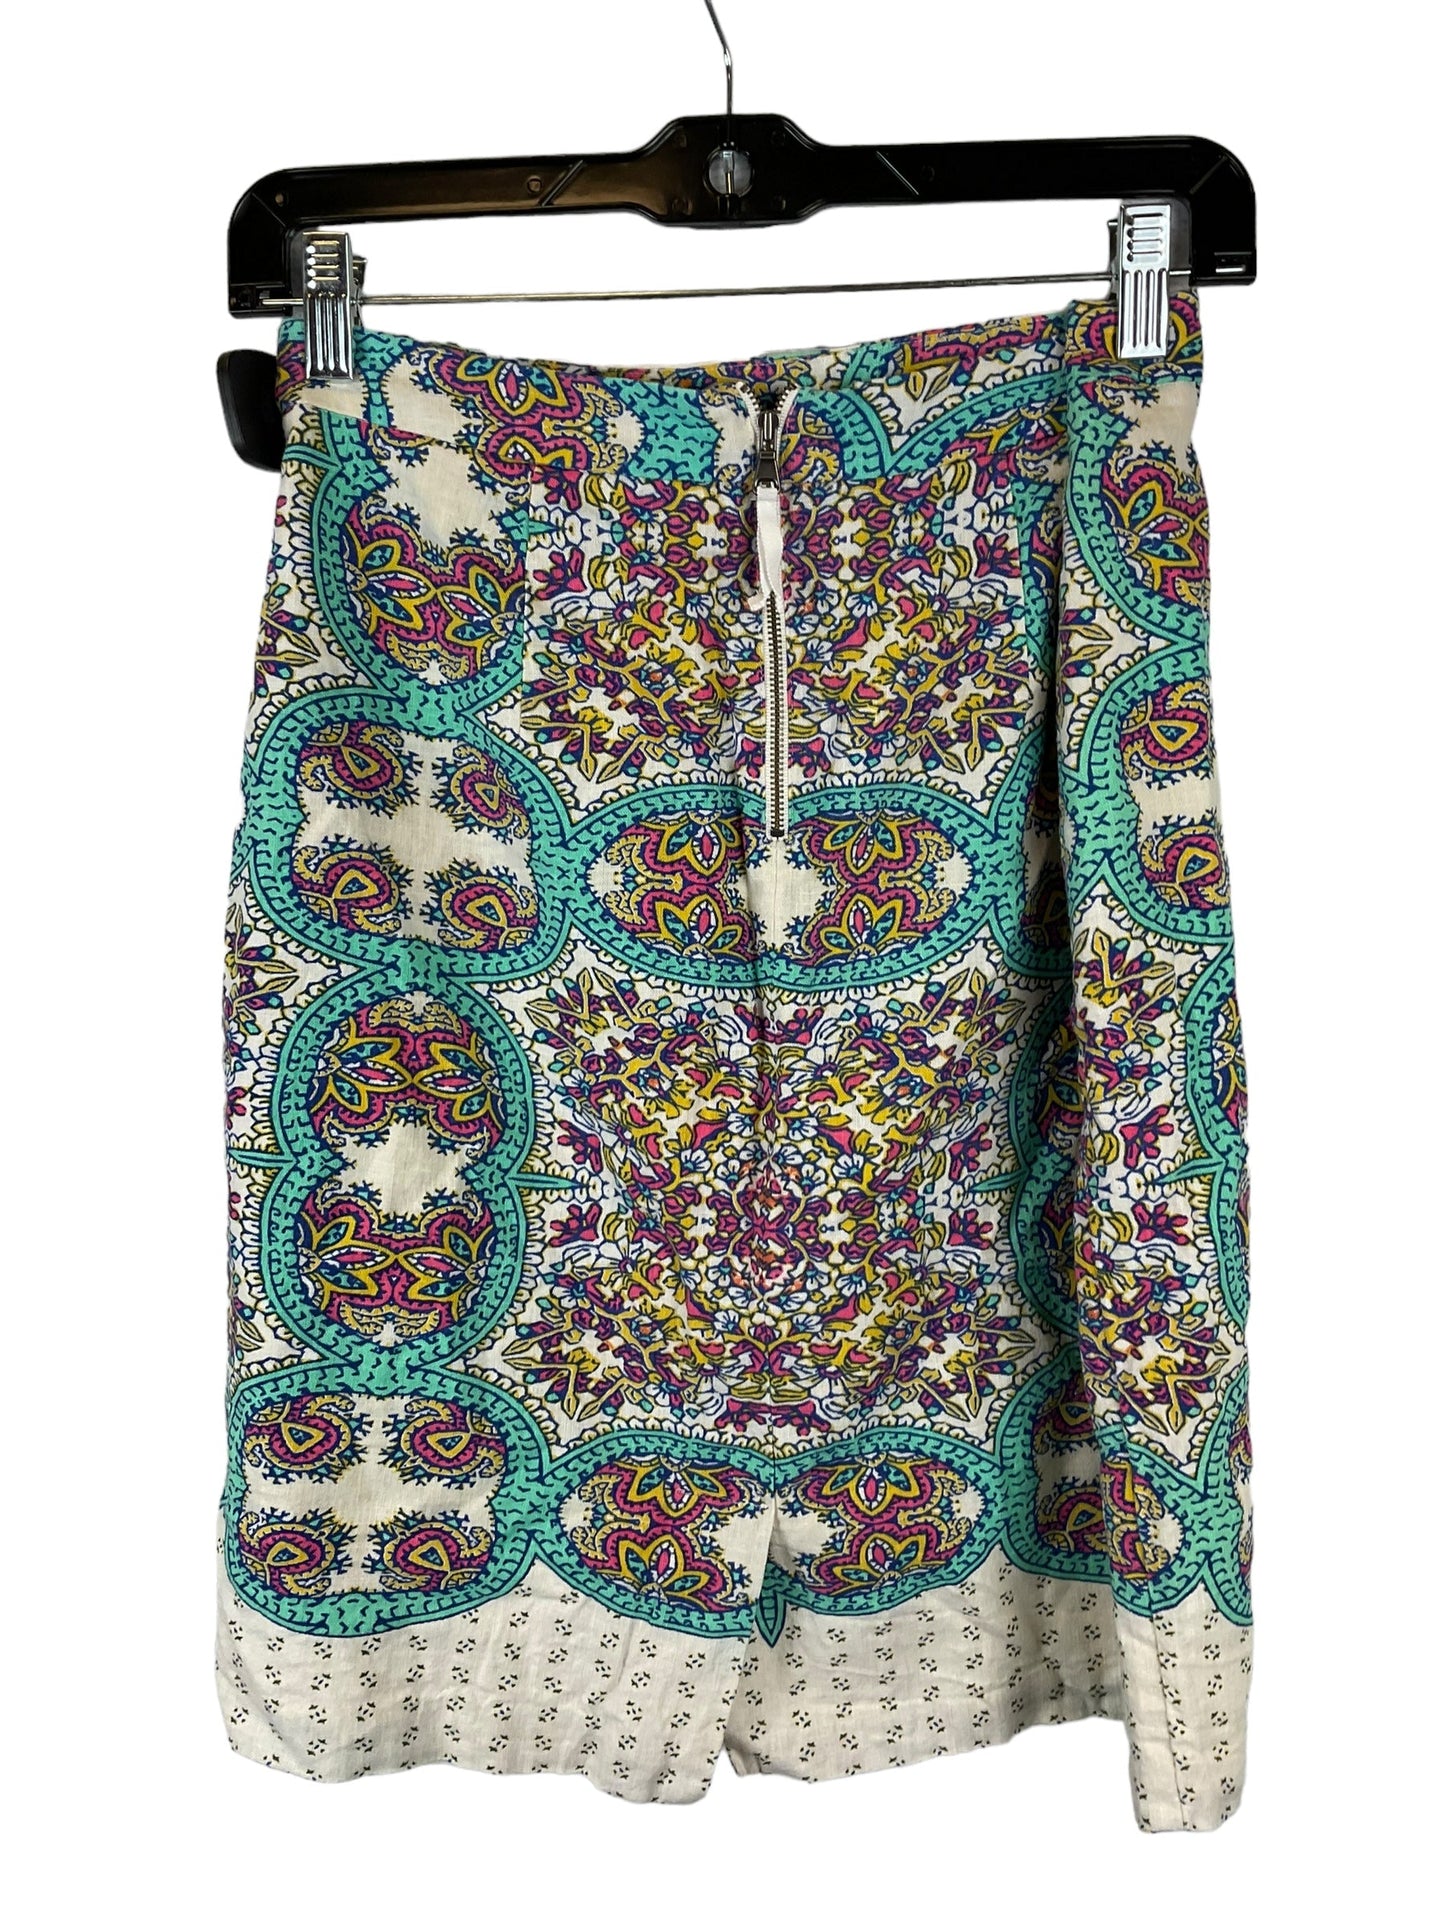 Skirt Mini & Short By Maeve  Size: 8